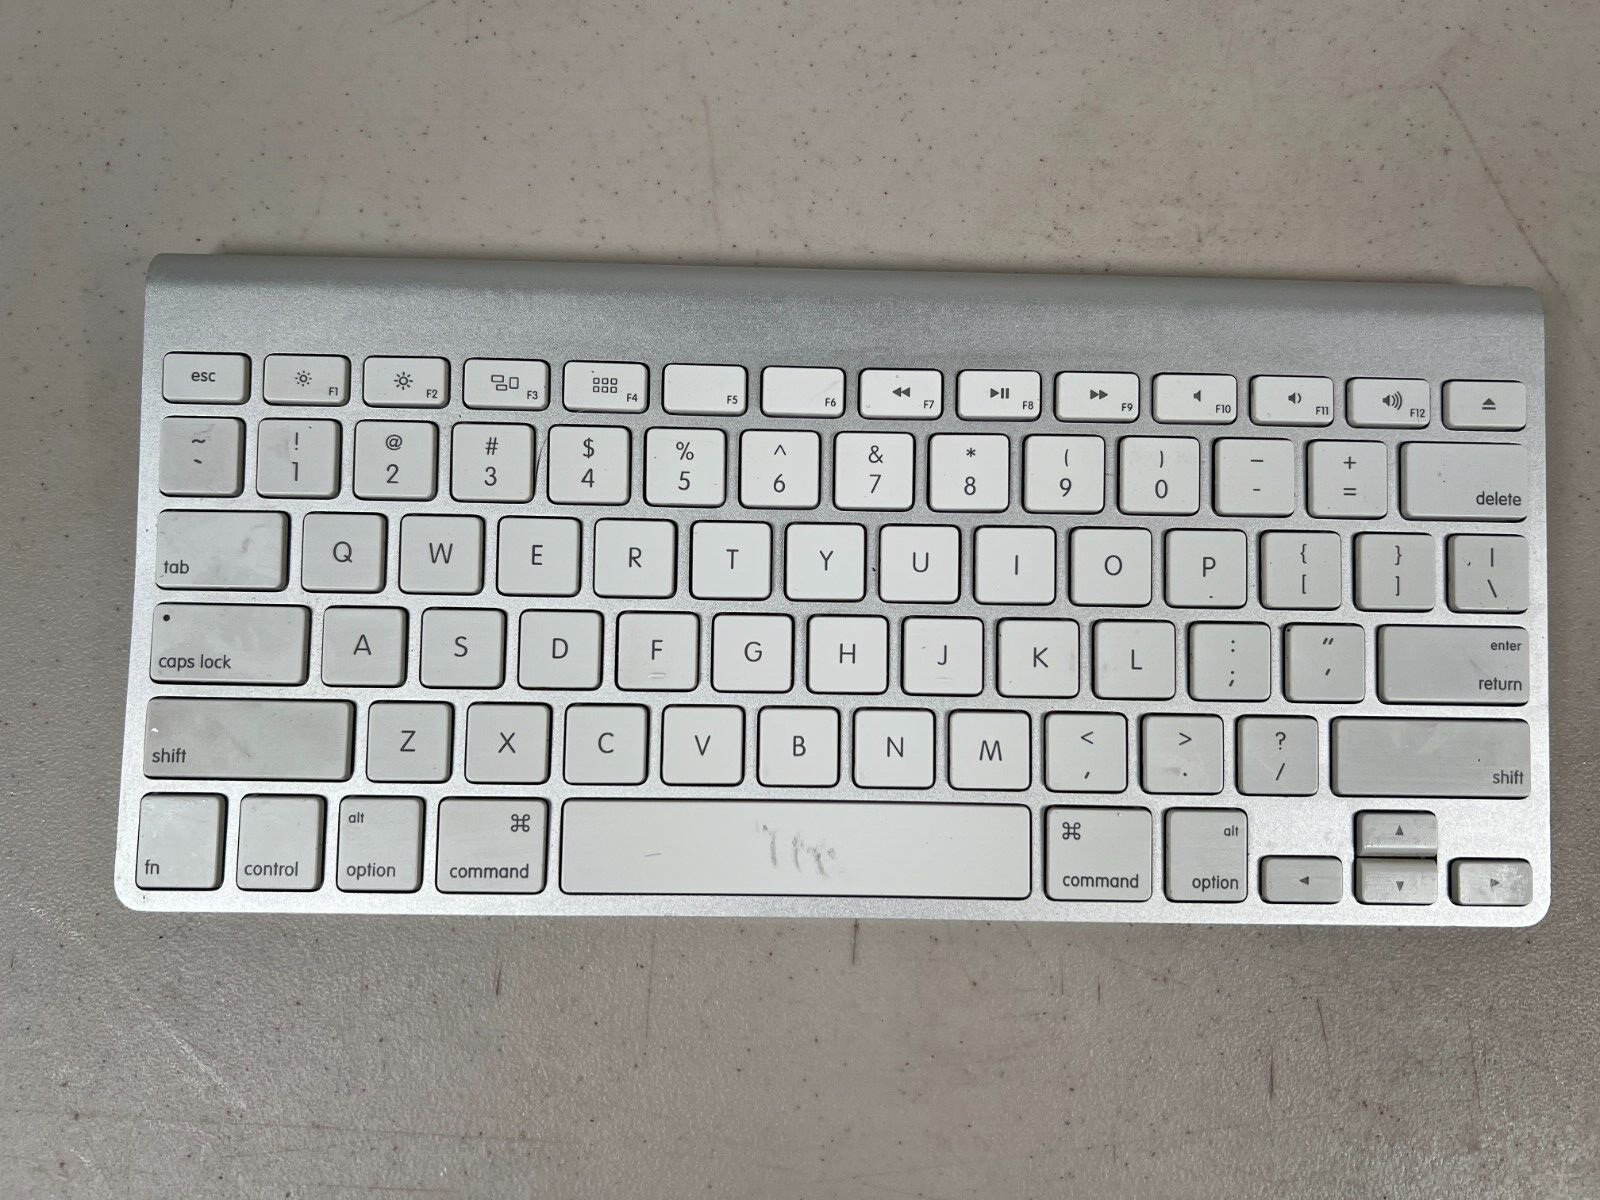 Apple A1314 Wireless Keyboard with Bluetooth for iMac / Mac / iPad